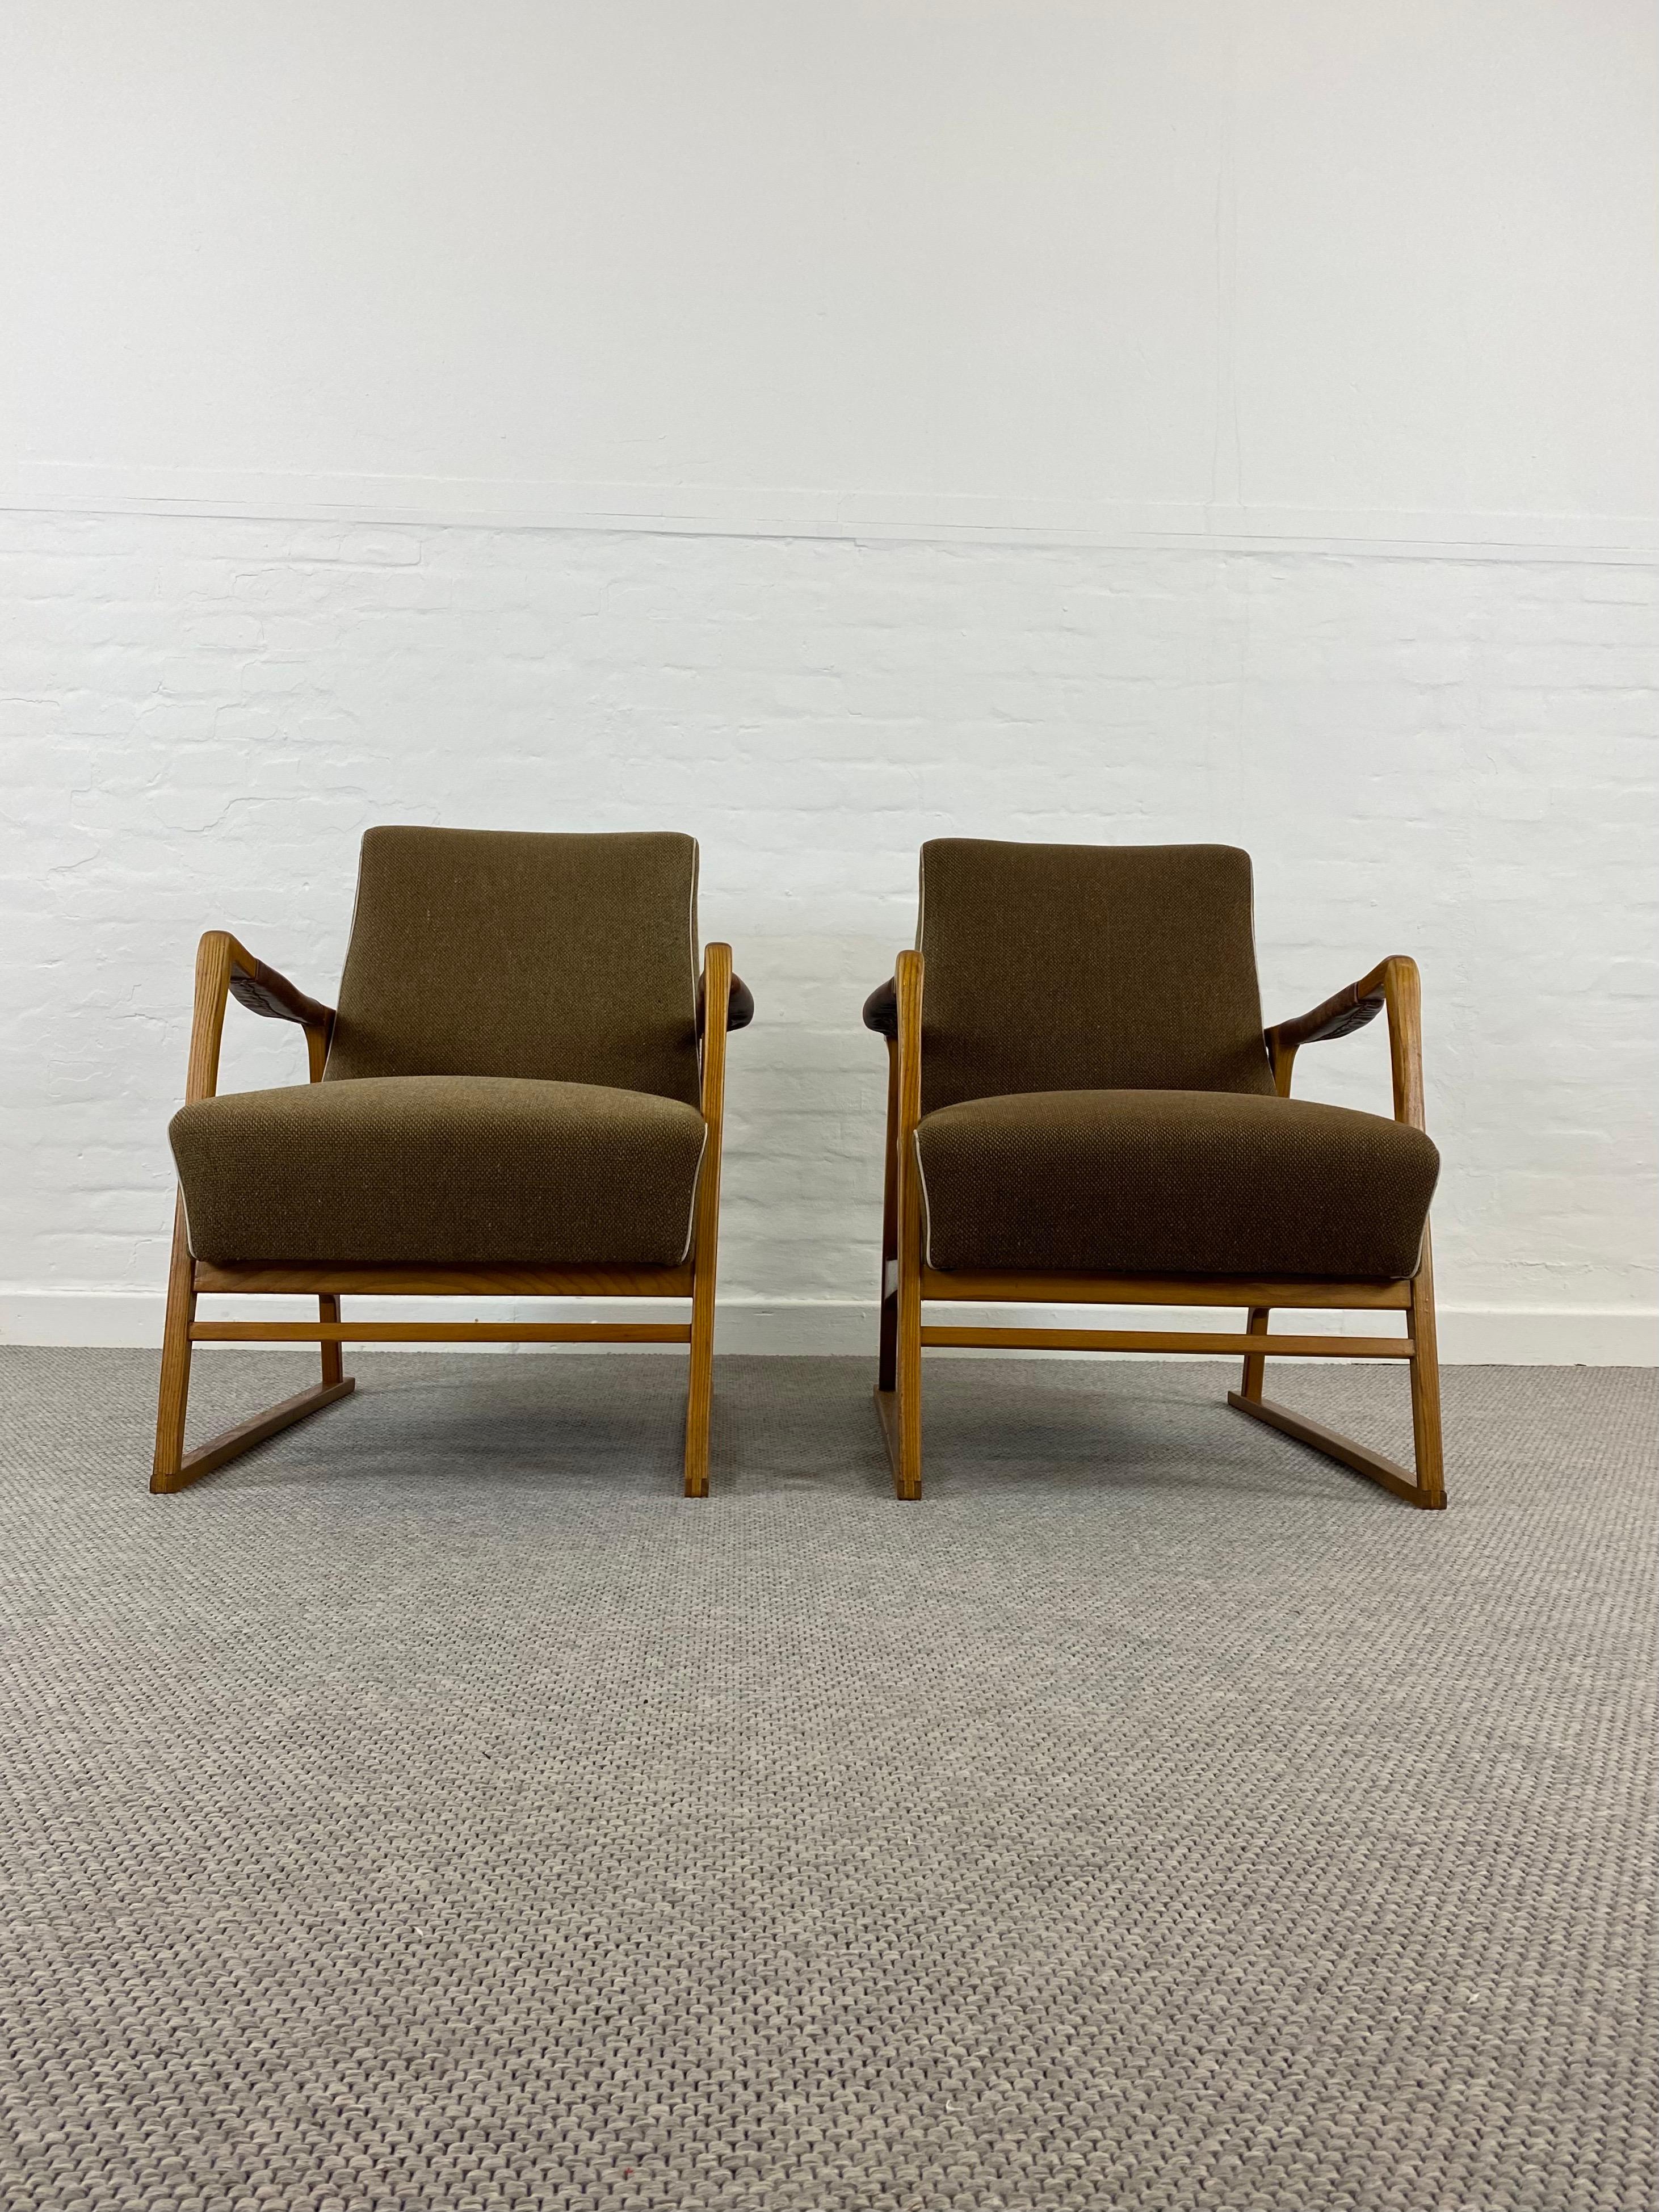 Pair of 1950s Midcentury WK Arm-Chairs with Runners for Deutsche Werkstätten For Sale 3